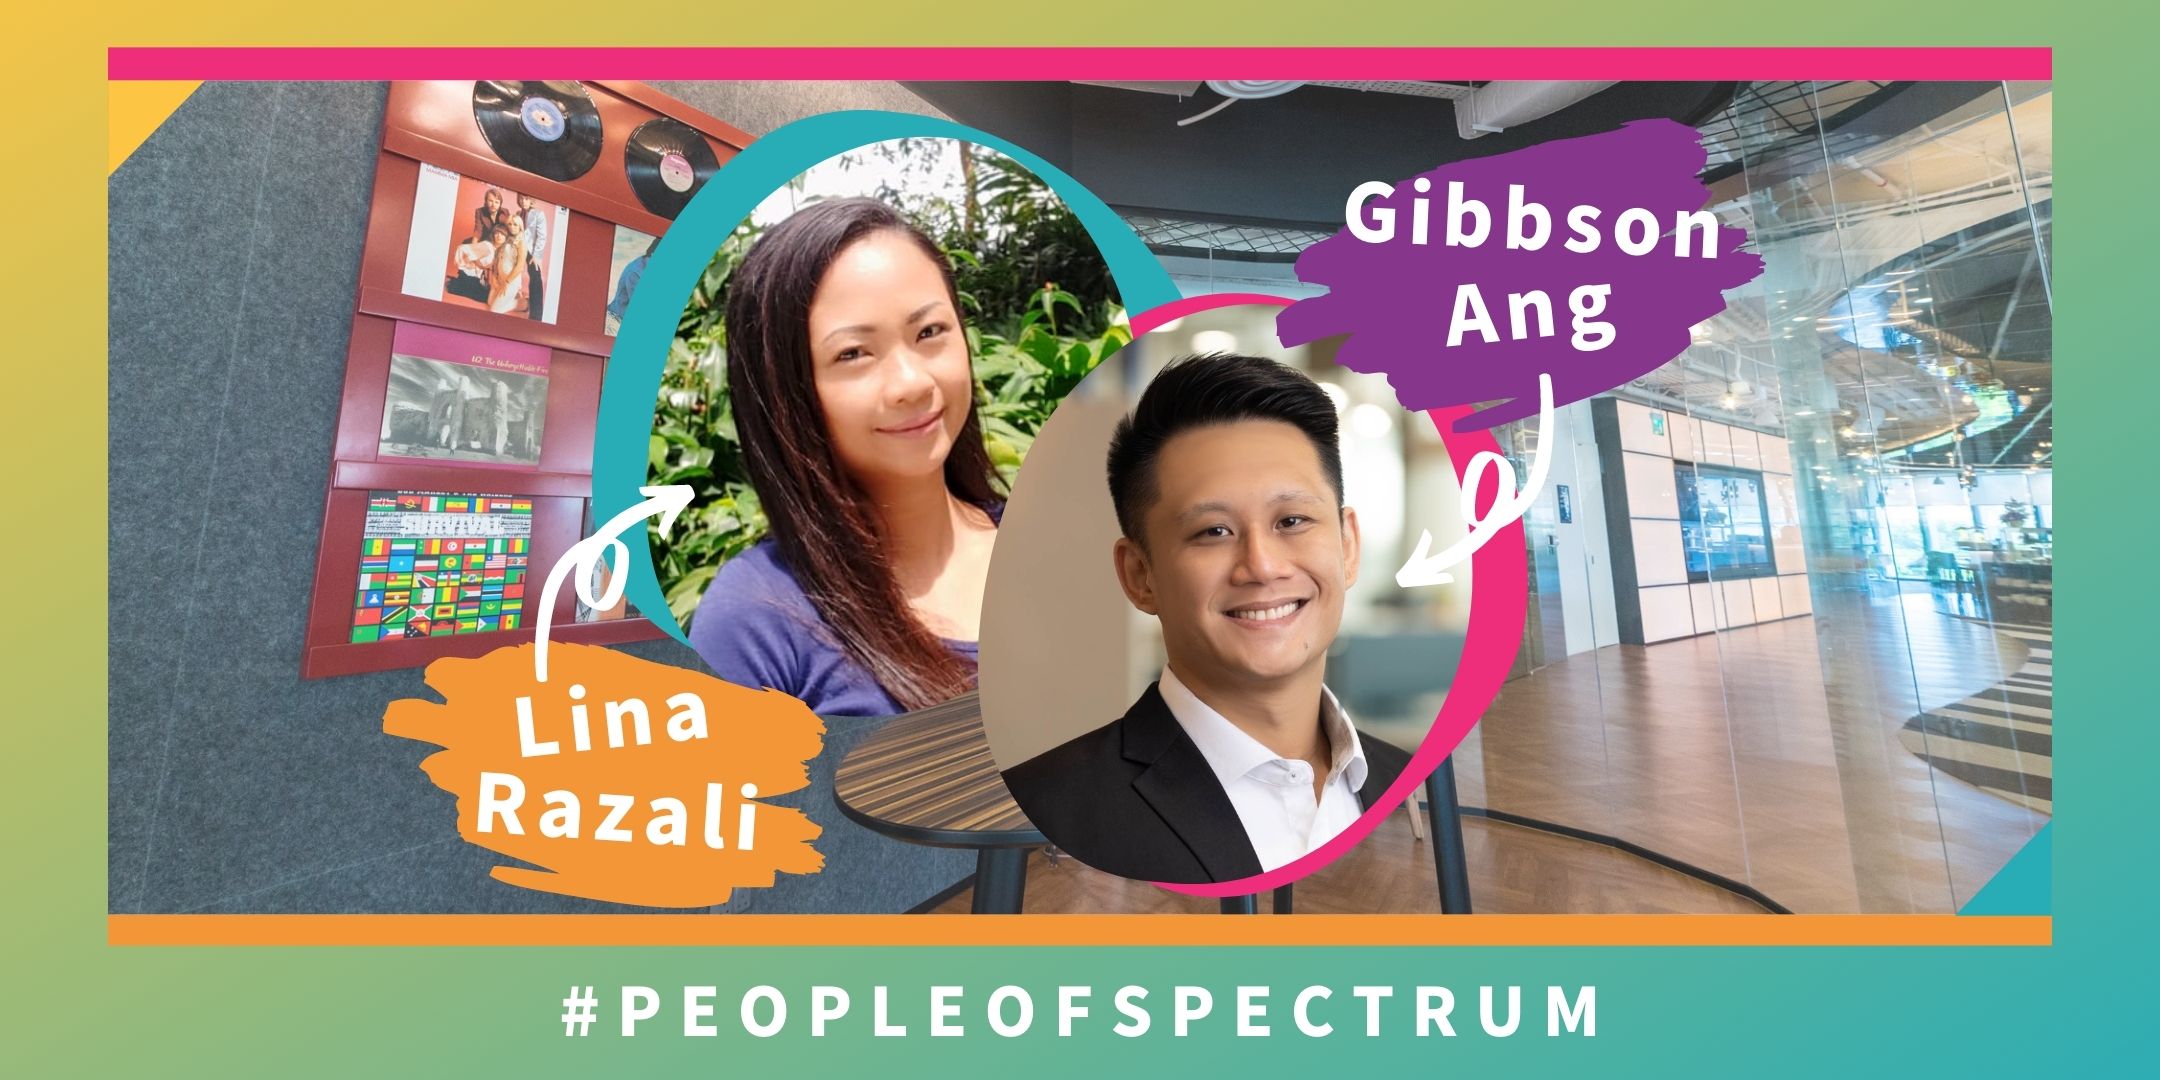 #PeopleofSPECTRUM - Lina and Gibbson (SPECTRUM)